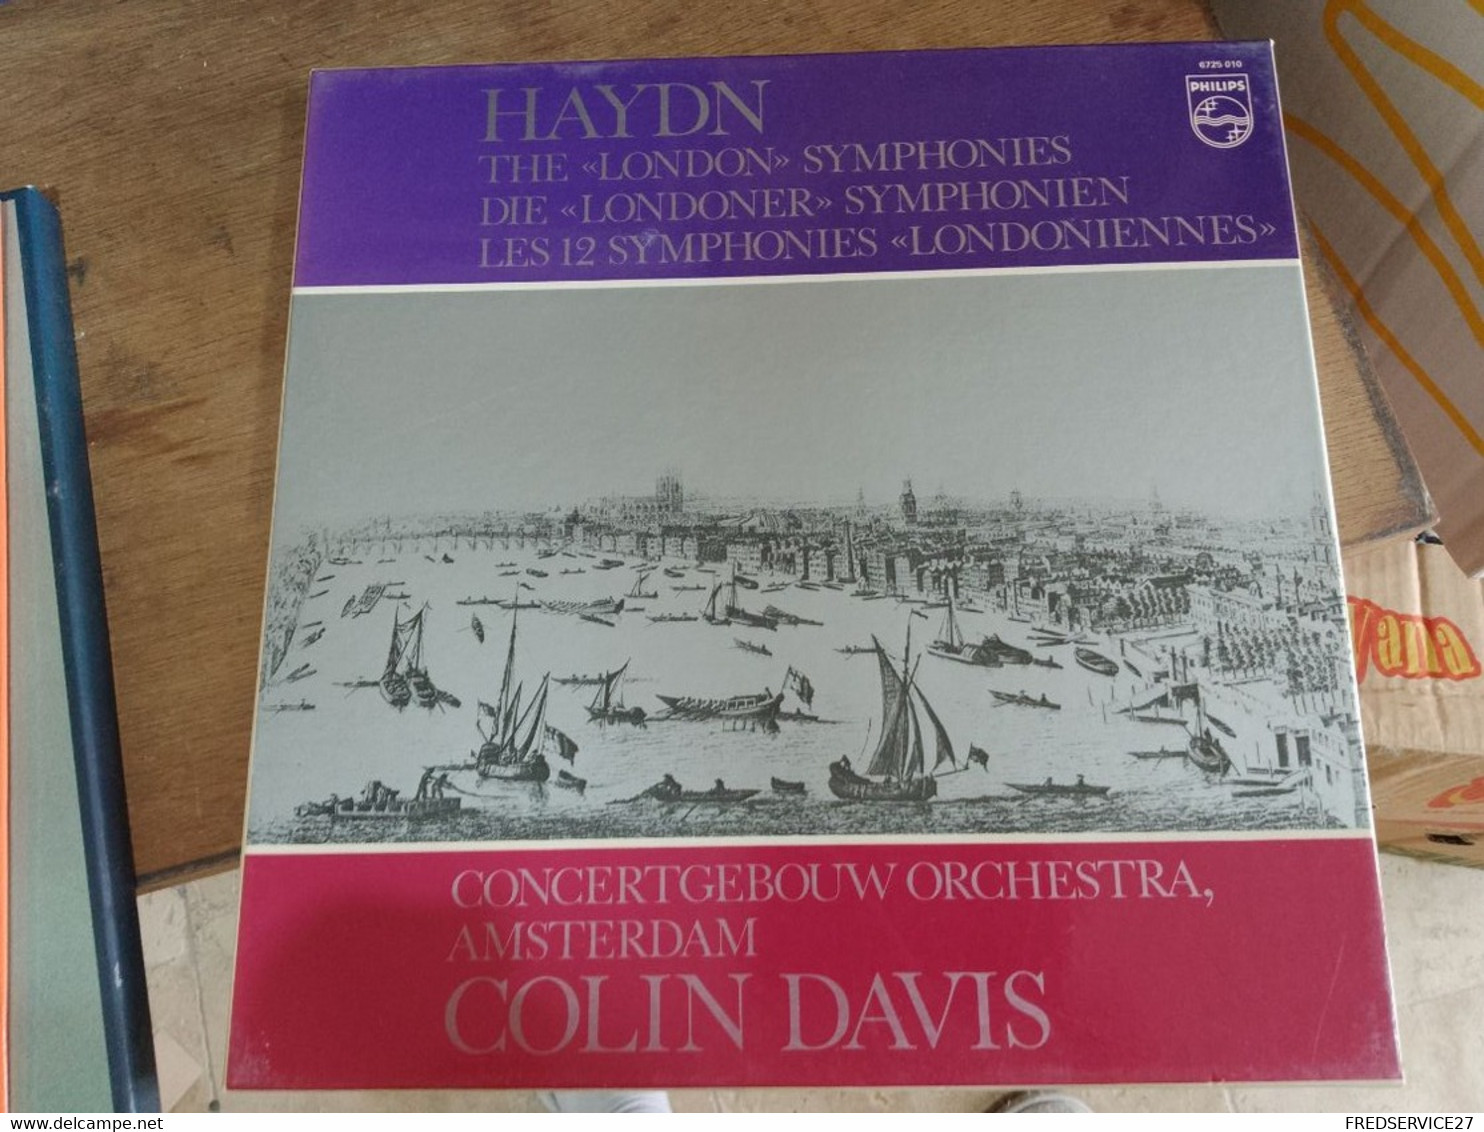 64 //  Haydn The London Symphonies / CONCERTGEBOUW ORCHESTRA  AMSTERDAM COLIN DAVIS - Instrumentaal